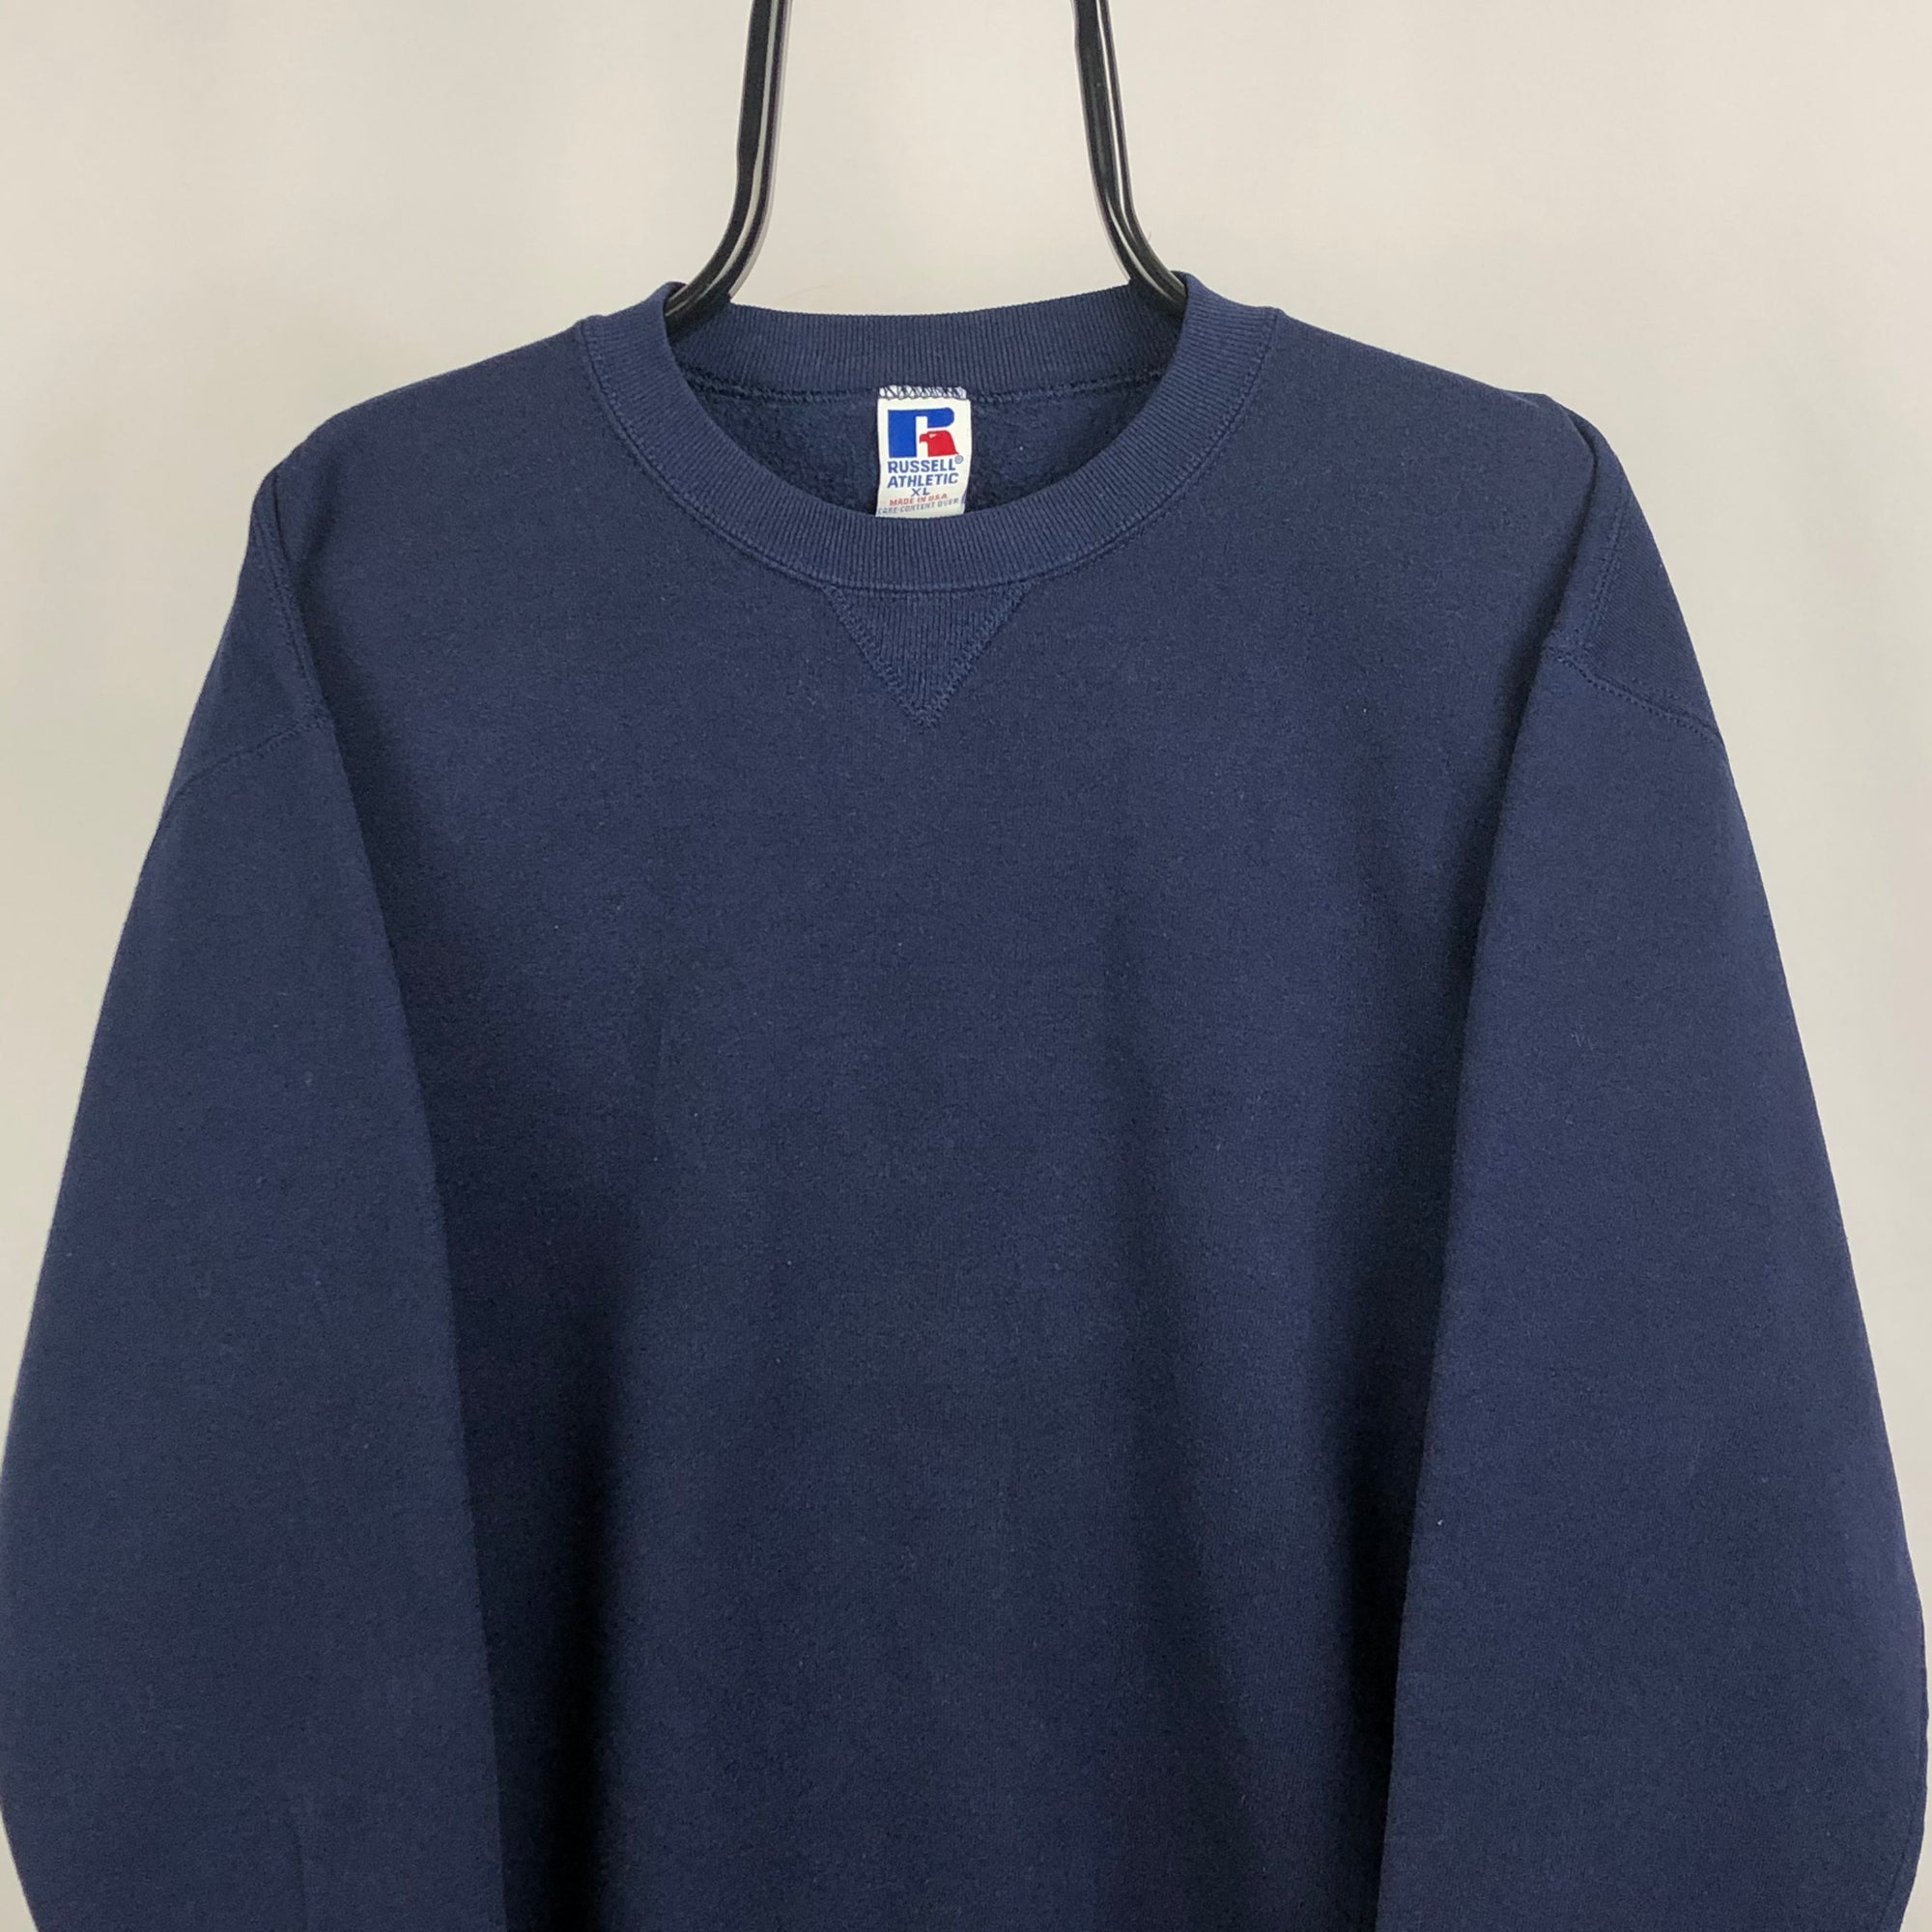 Vintage Russell Athletic Sweatshirt in Navy - Men's Large/Women's XL